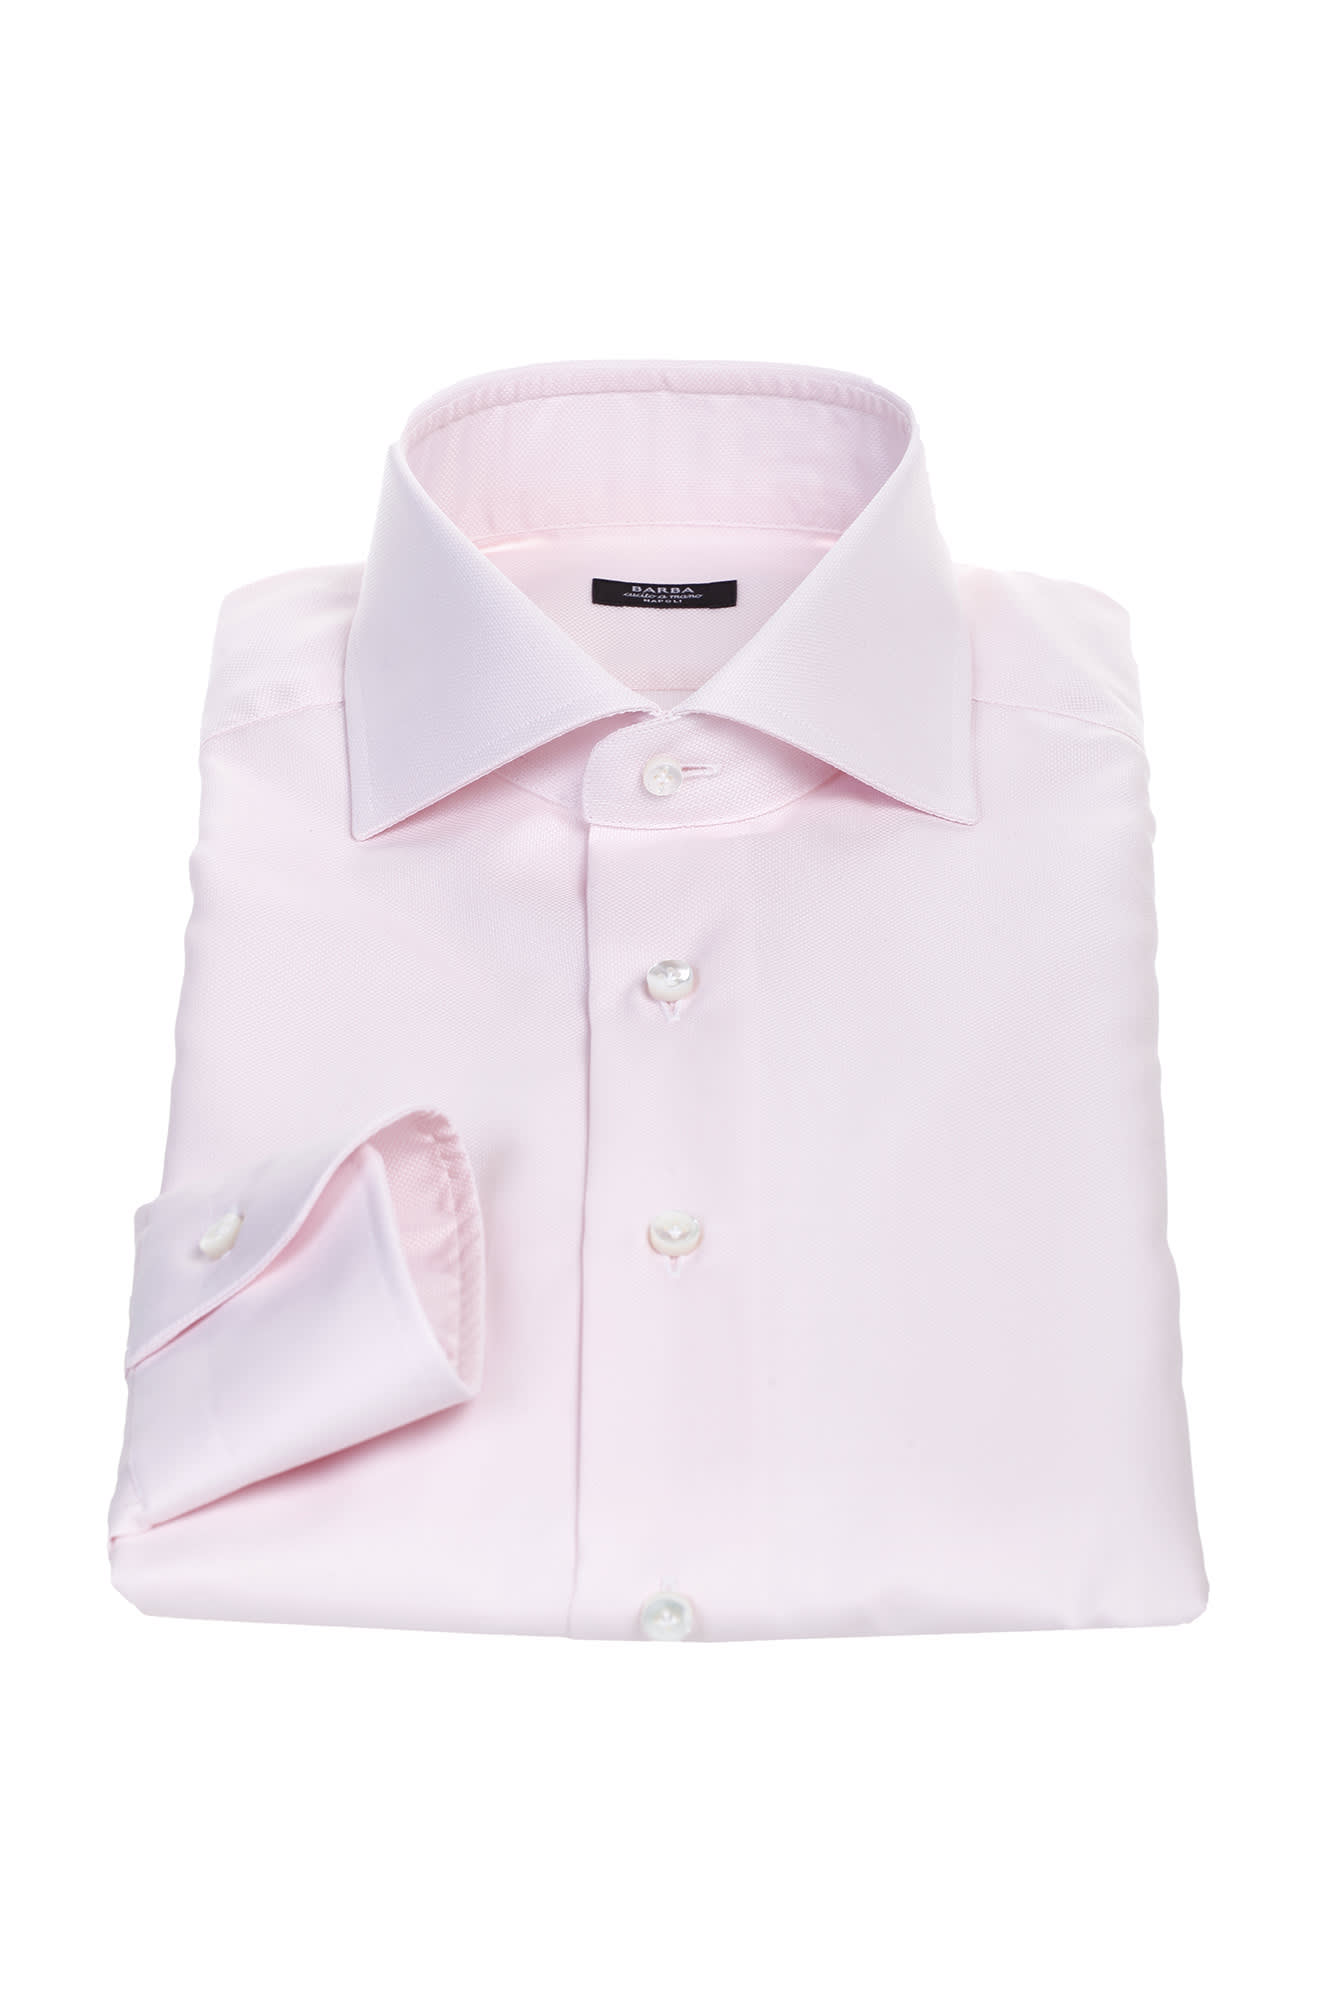 Barba Napoli Barba cotton shirt, pink